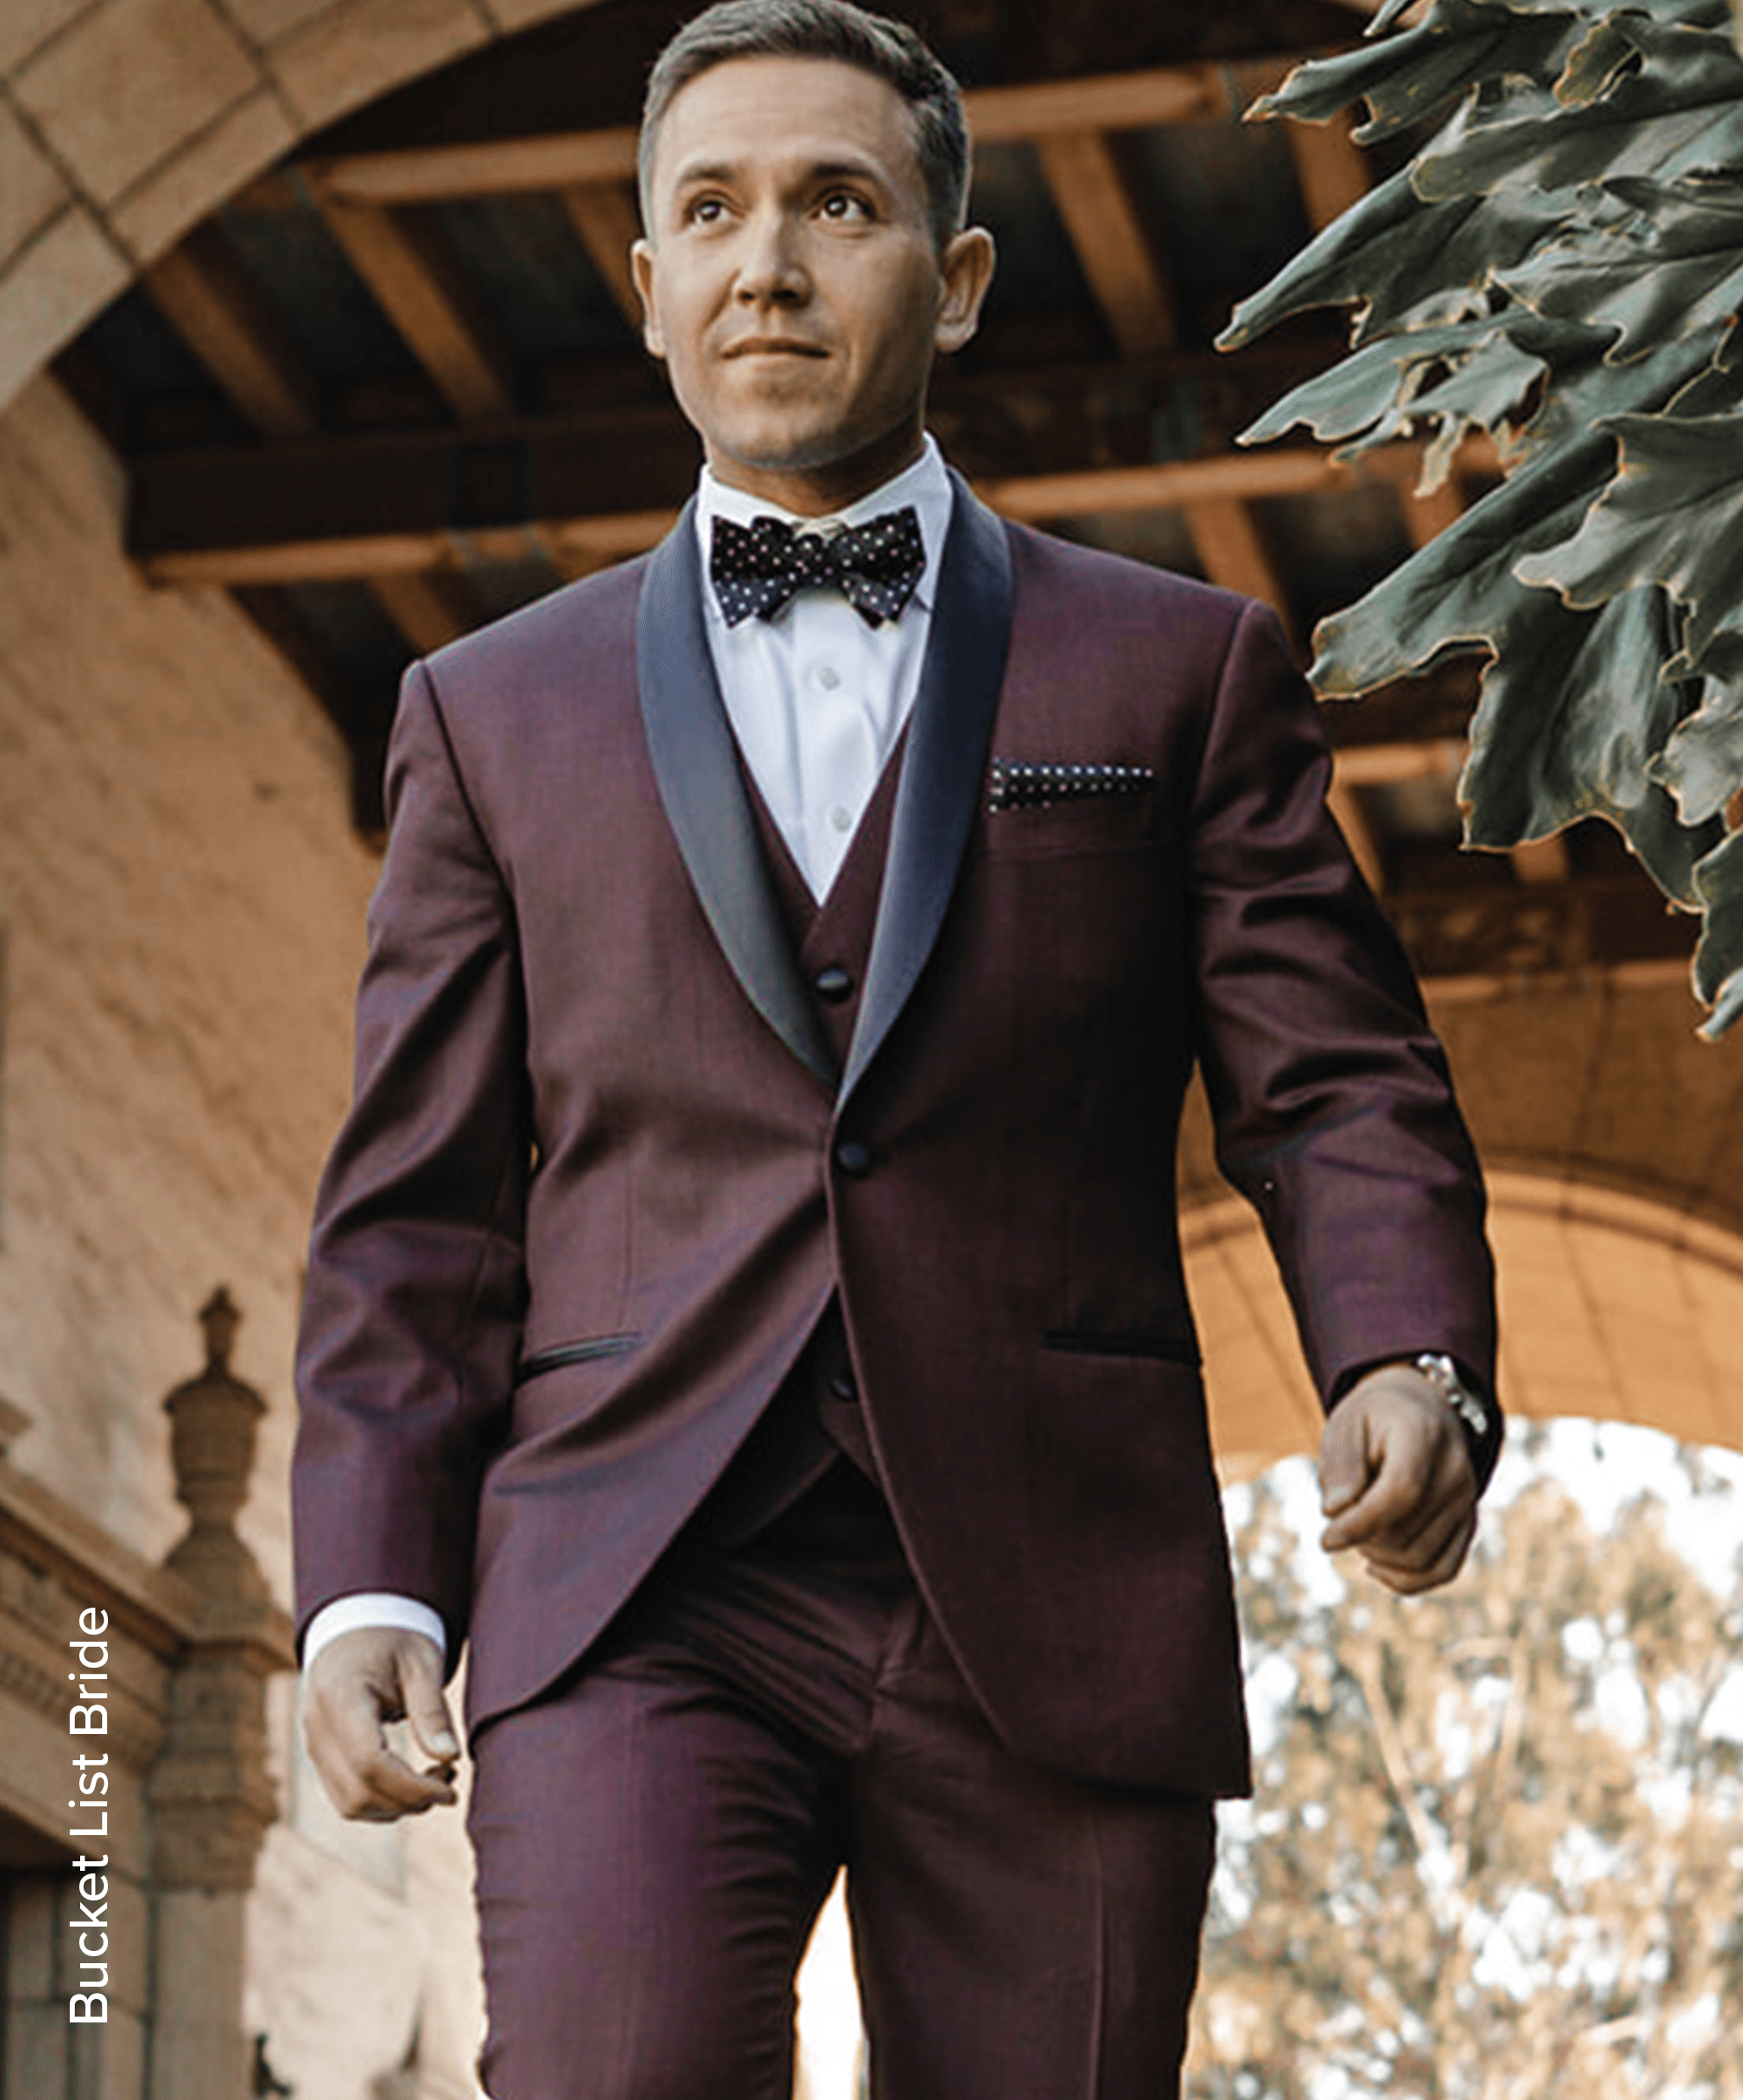 Formal Wear for Men- Suits & Tuxedos, Buy & Rent Online